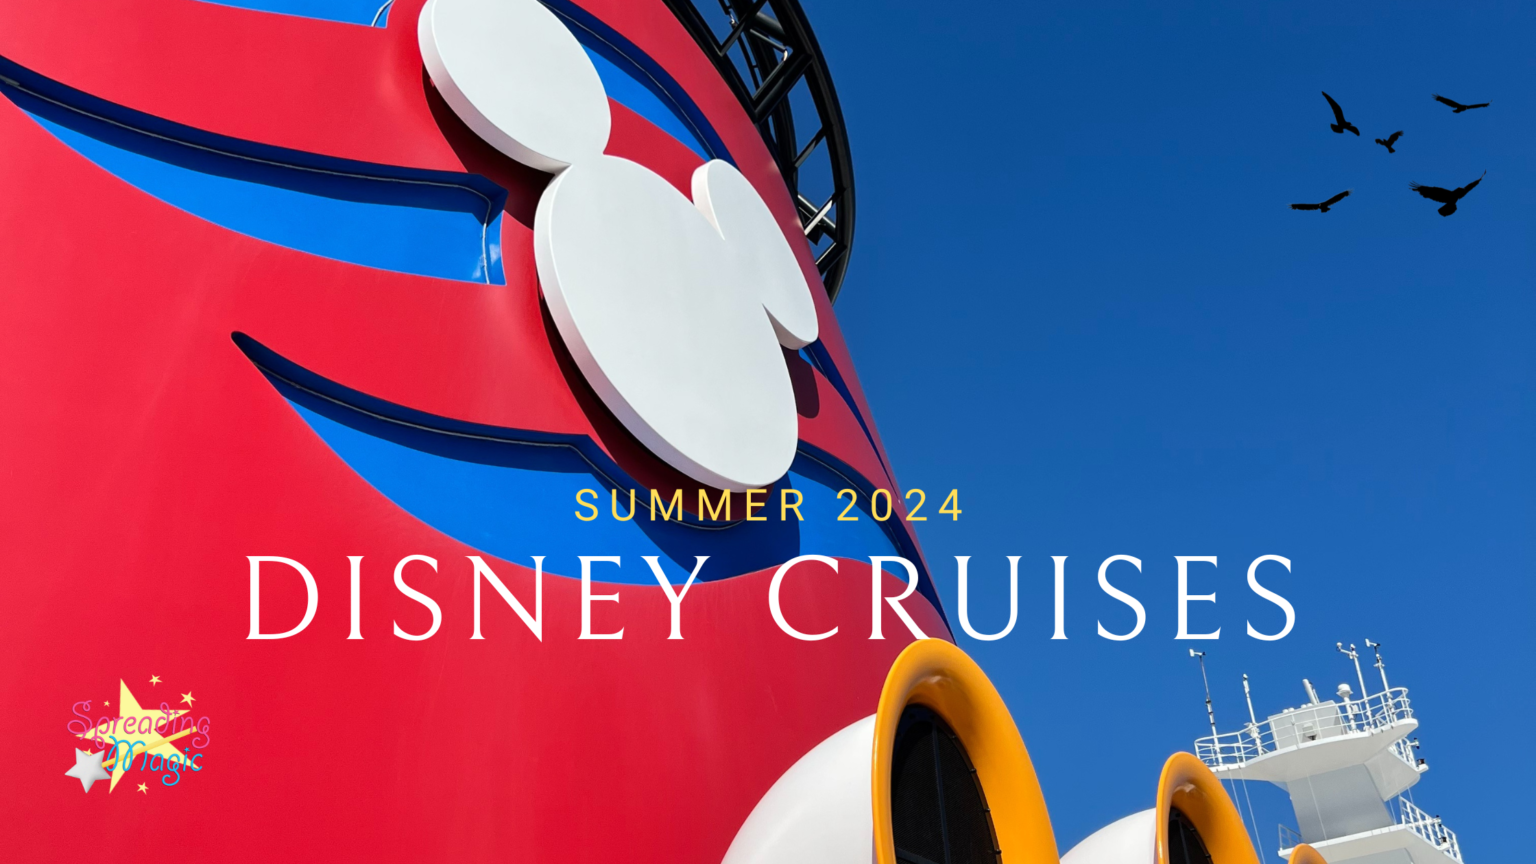 Summer 2024 Disney Cruise Line Itineraries